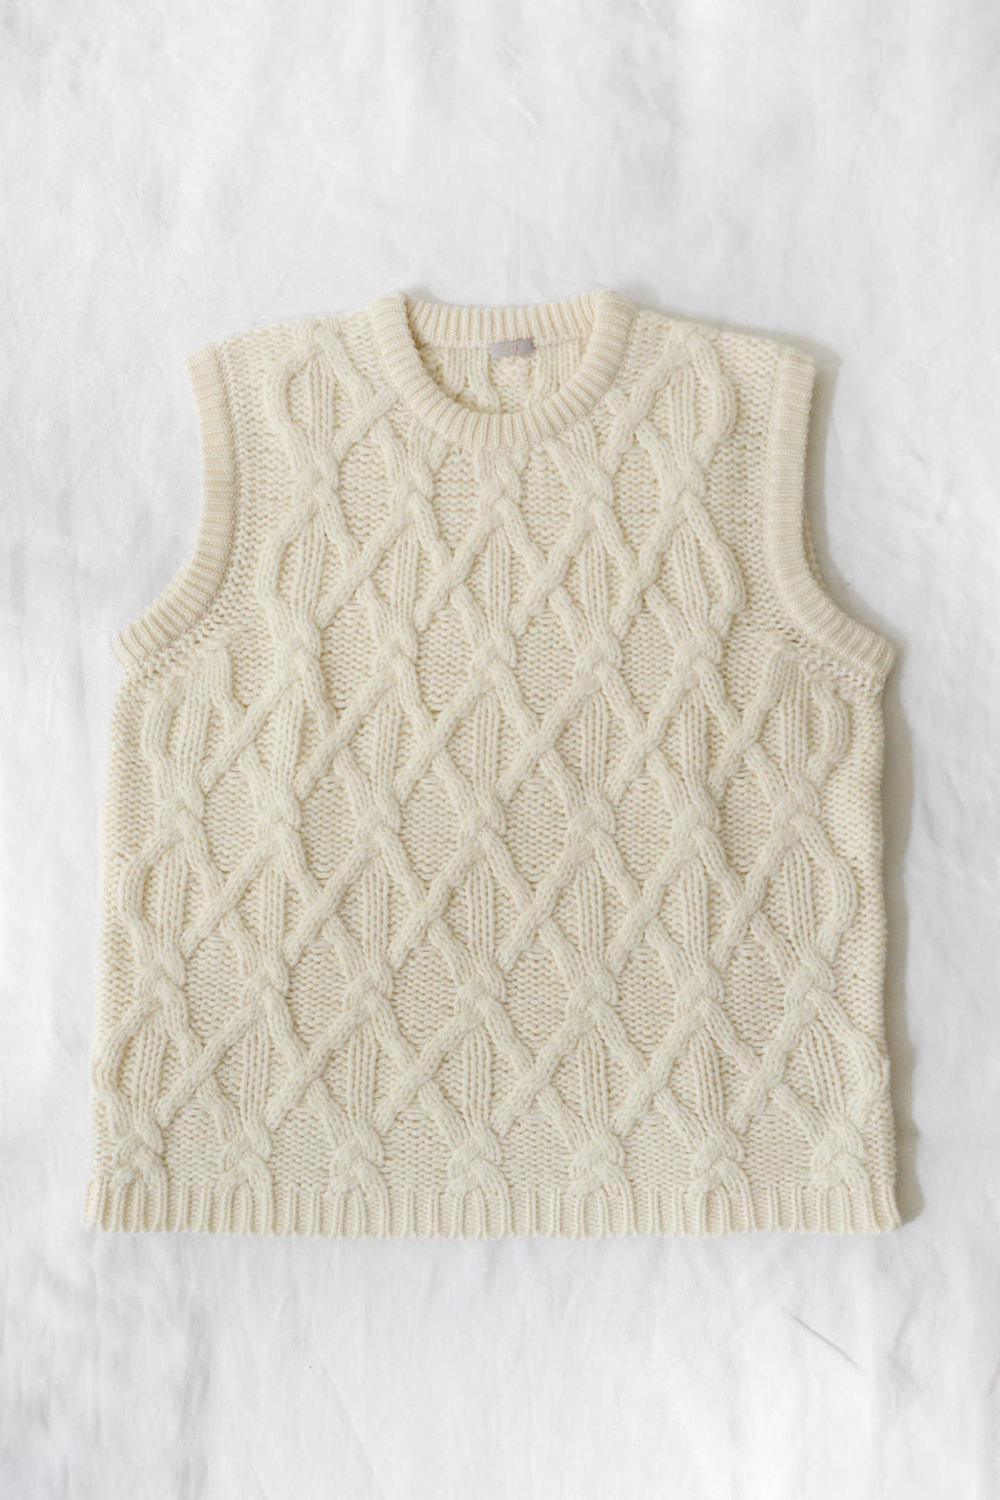 makie cashmere cable knit vest cream a top picture